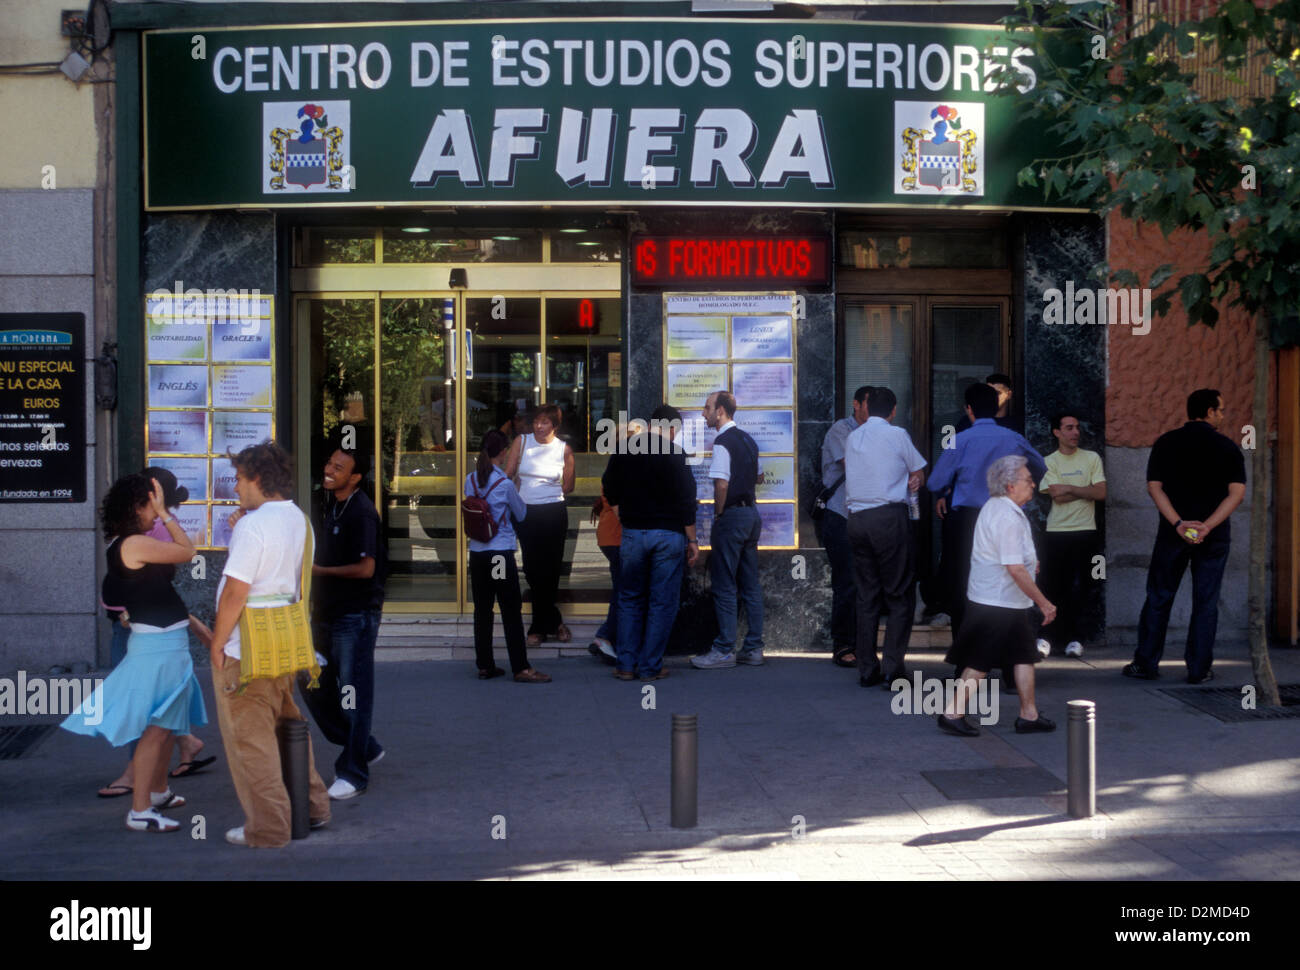 Spaniards, Spanish people, Centro de Estudios Superiores, AFUERA, Plaza de Santa Ana, Madrid, Madrid Province, Spain, Europe Stock Photo